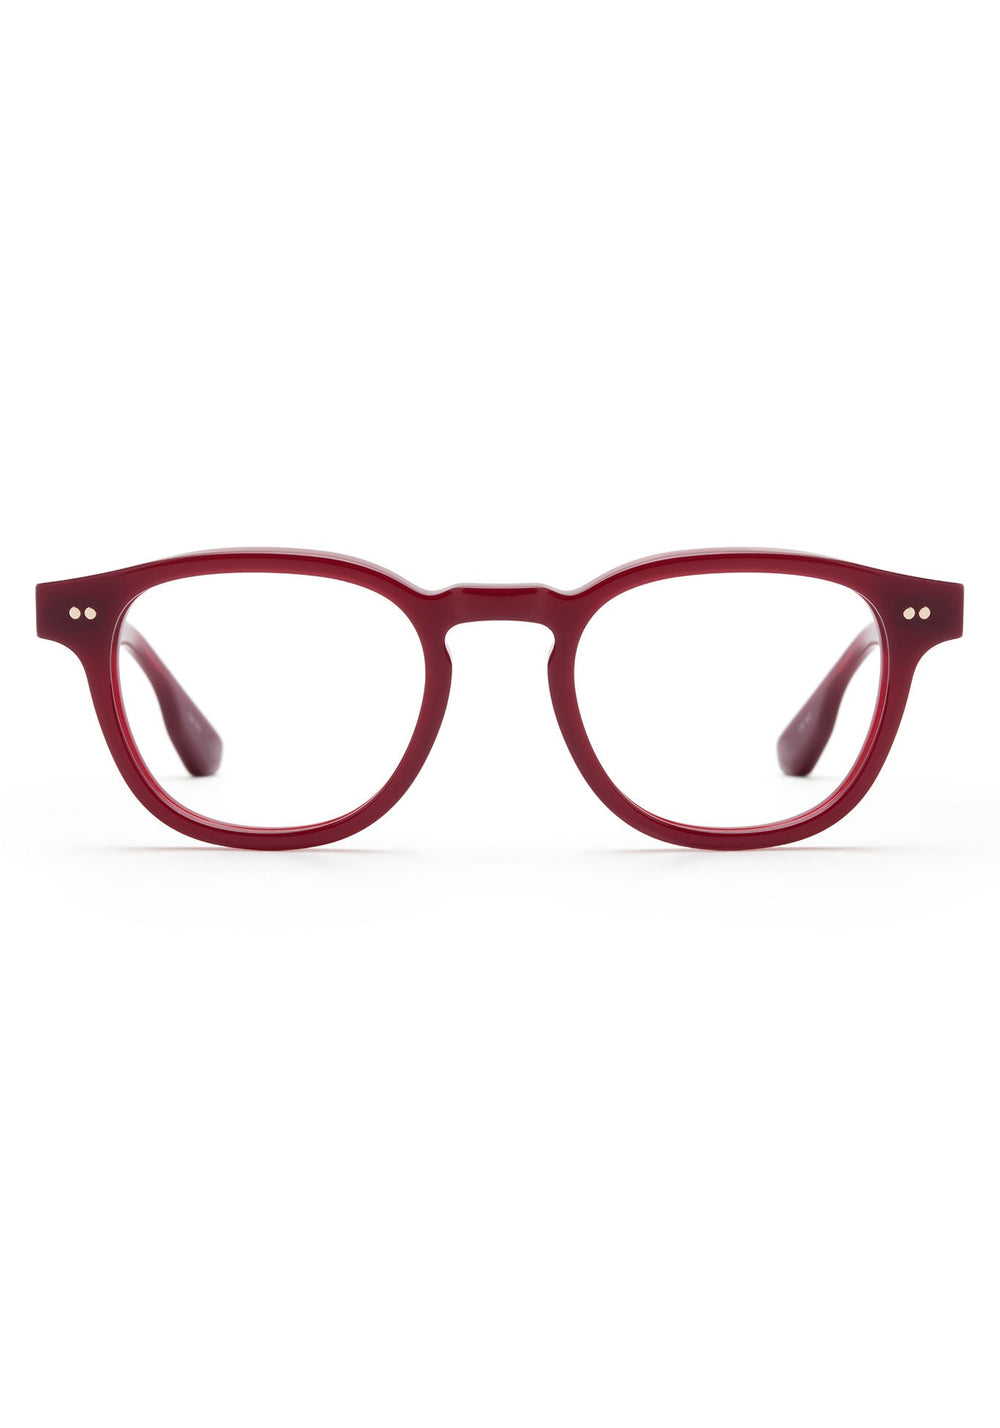 KREWE - MERCER | Brandy Handcrafted, luxury red acetate glasses